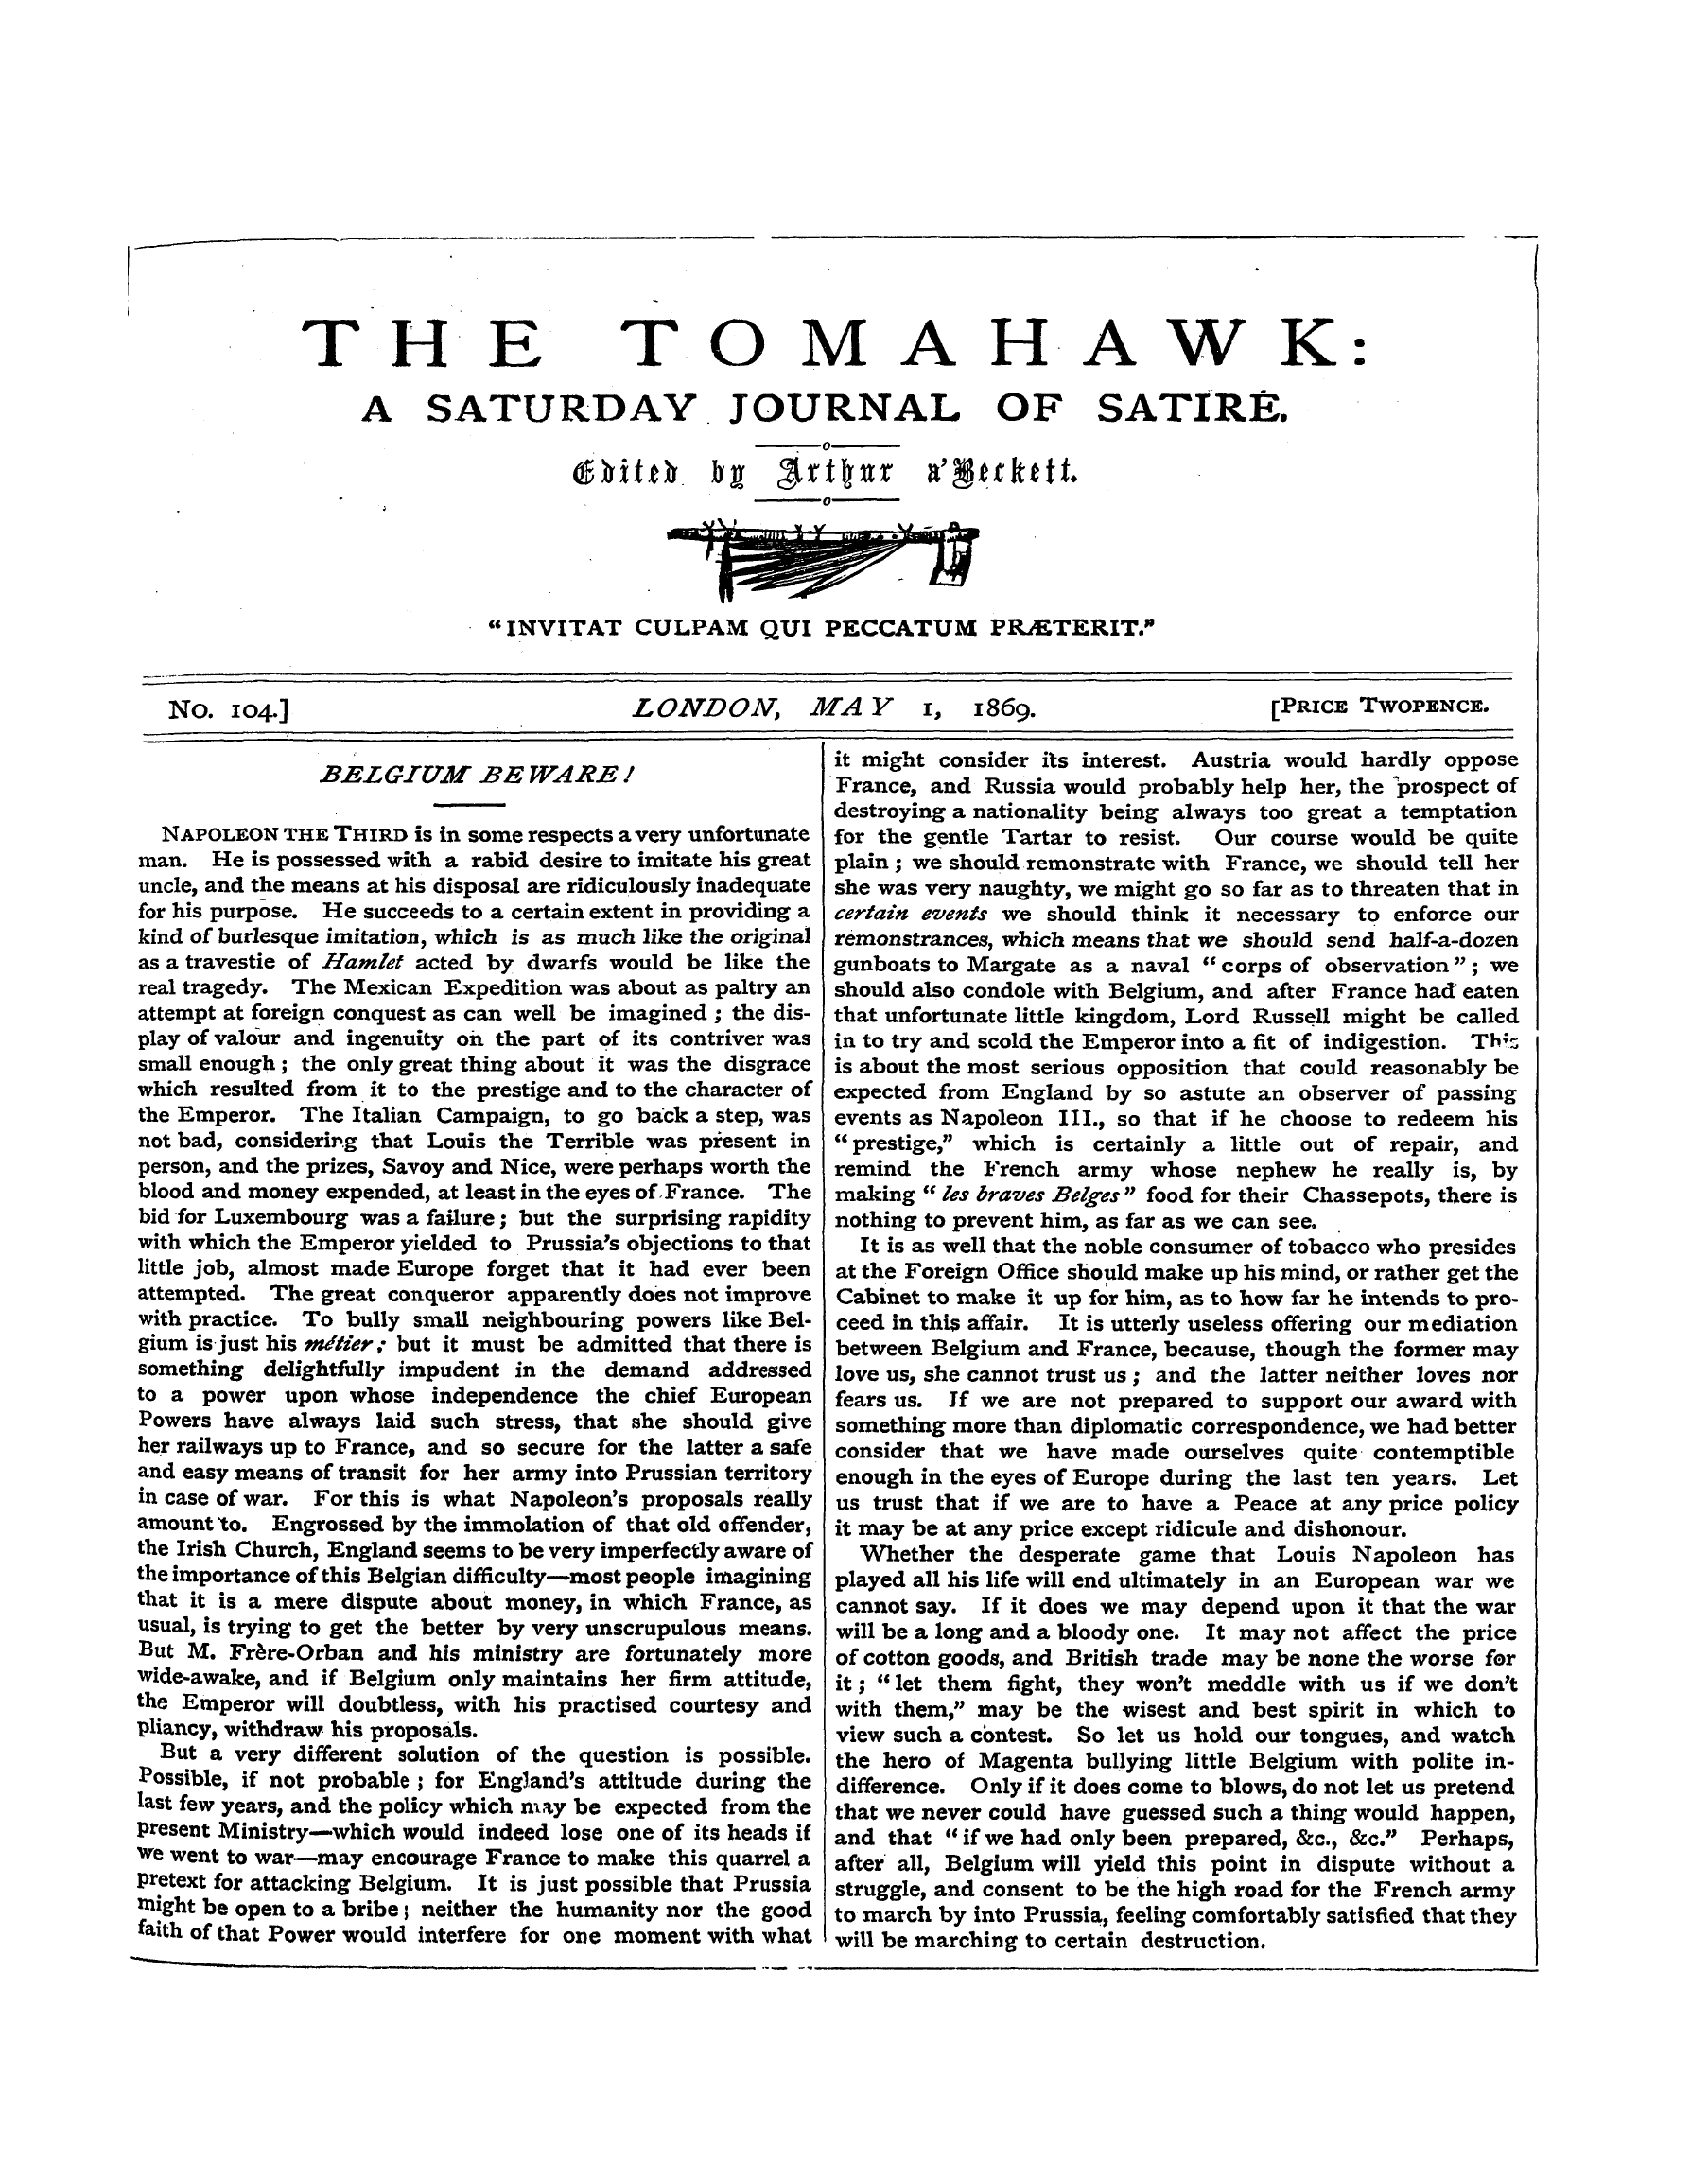 Tomahawk (1867-1870): jS F Y, 1st edition - Belgium Be Ware 1